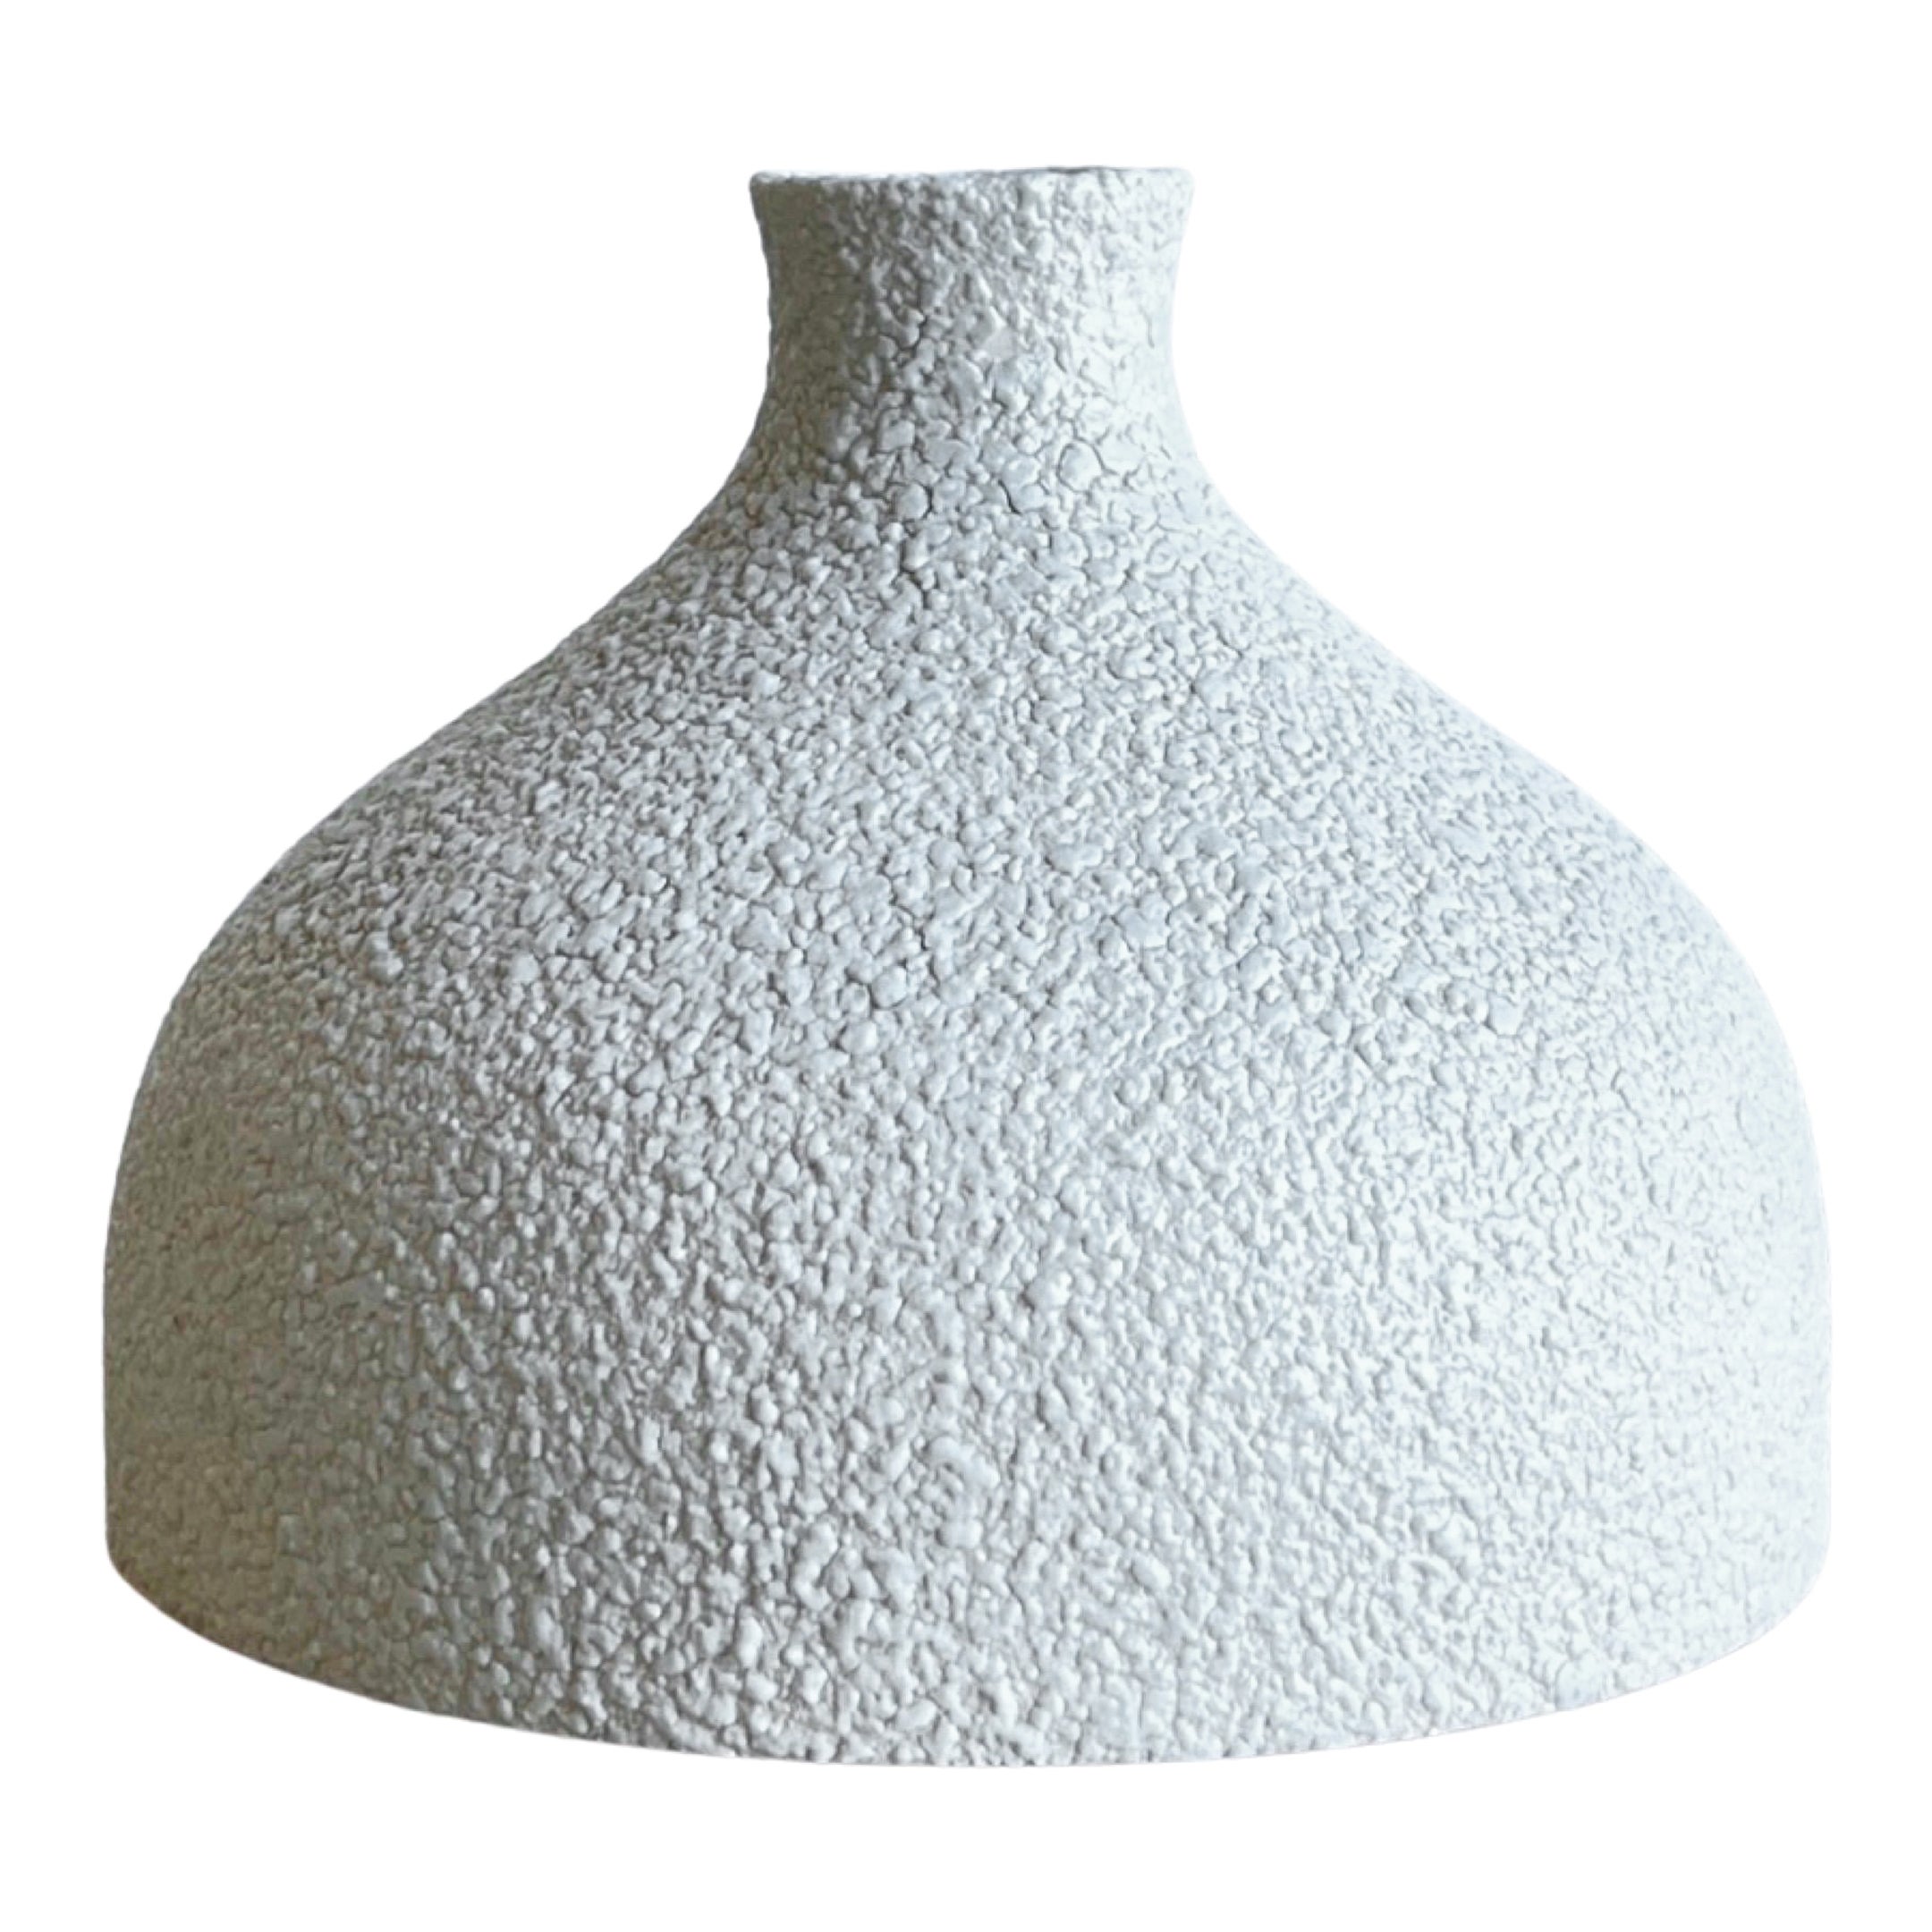 Ceramic Vase by Sgrafo Modern Germany